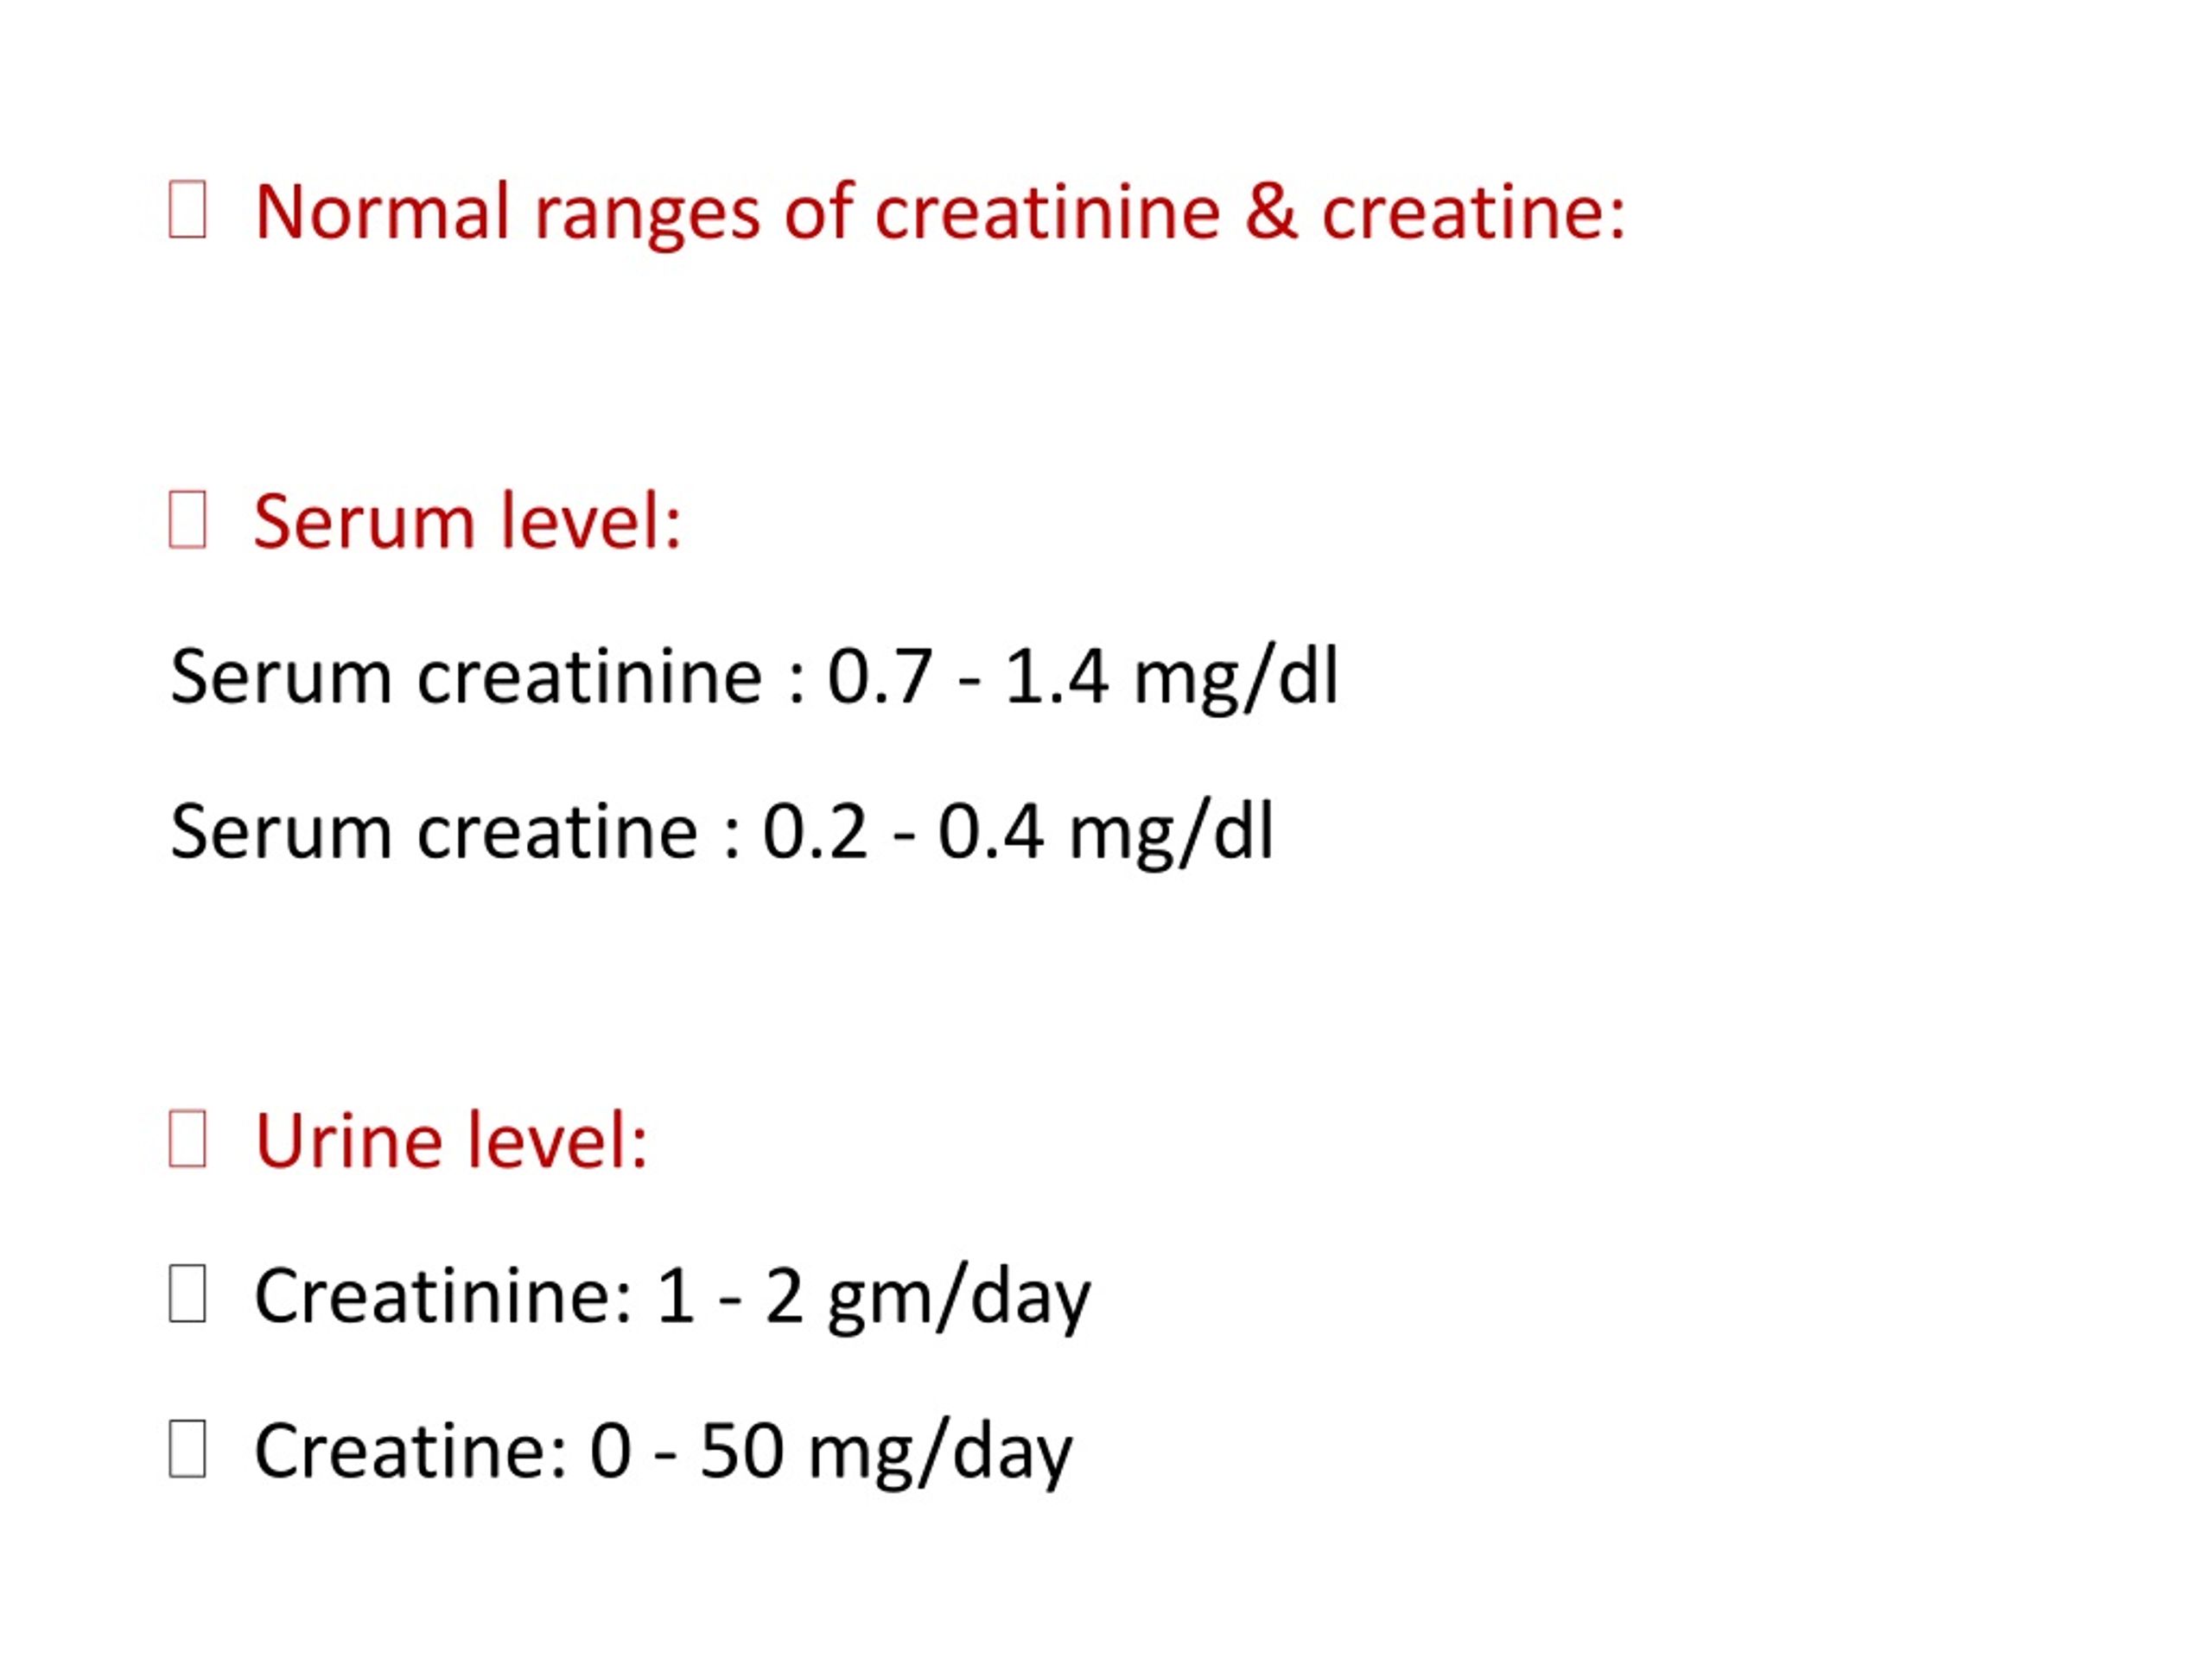 bun and creatinine normal ranges